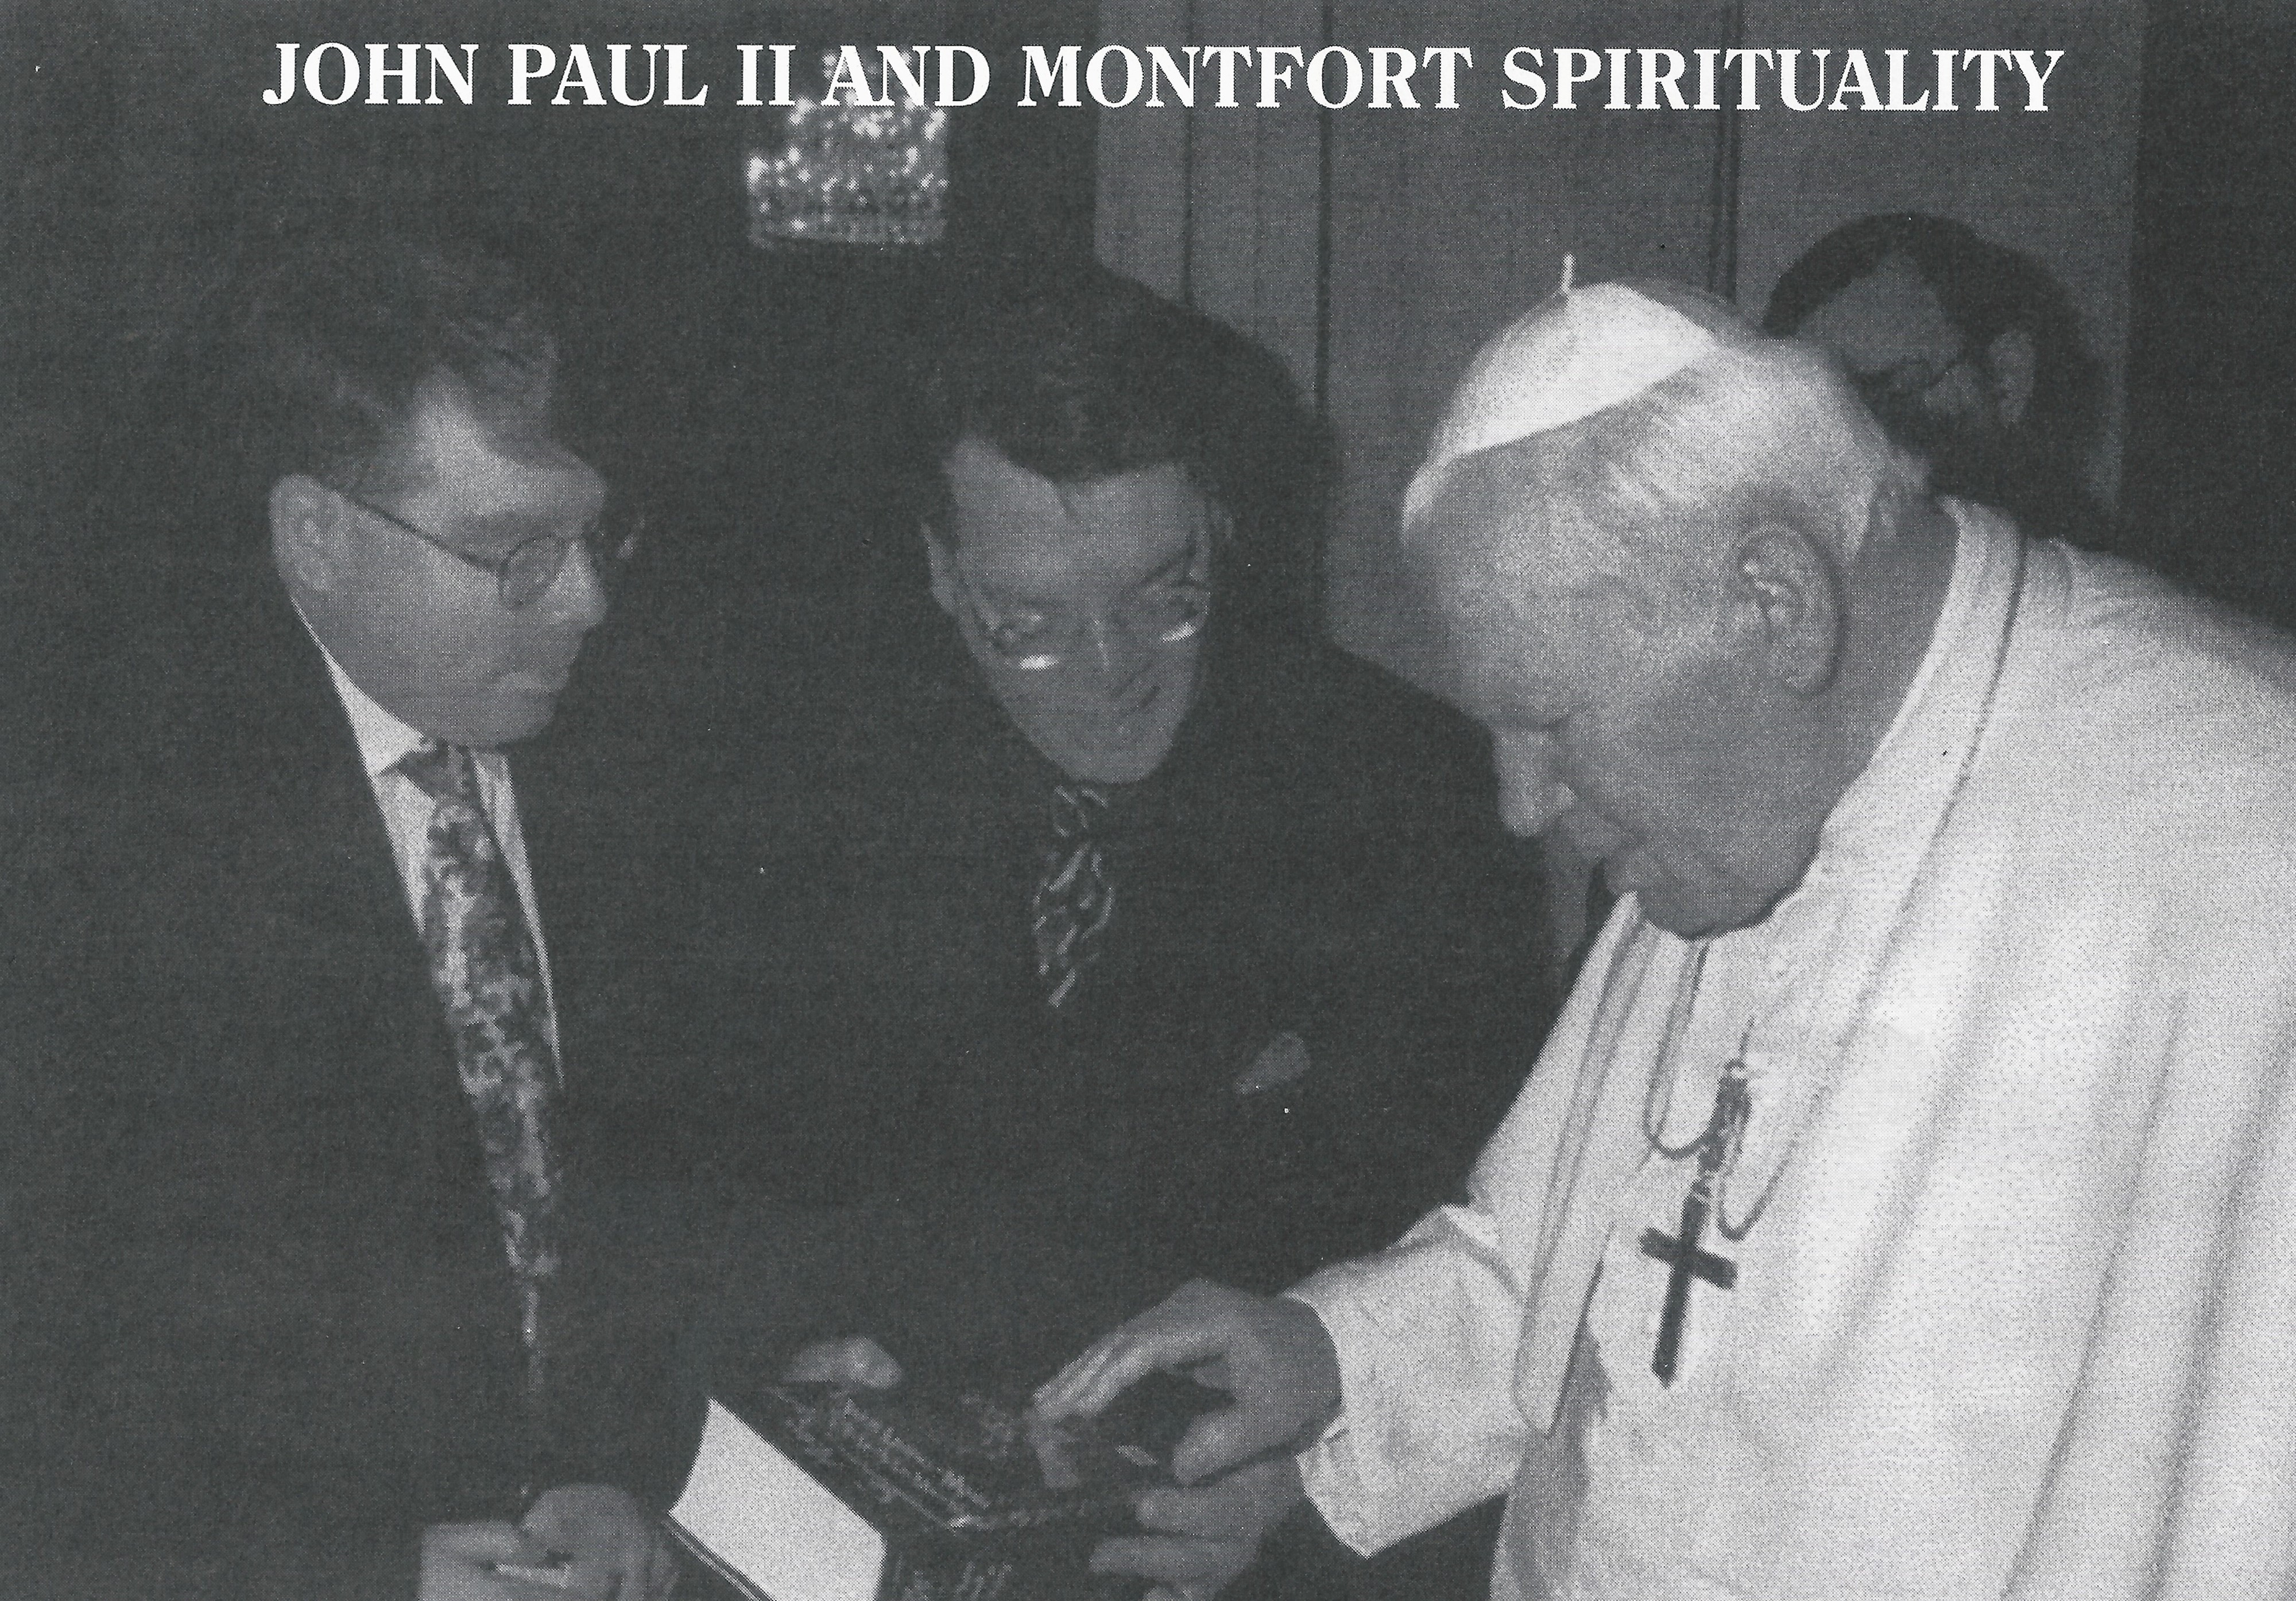 St Pope John Paul II and Montfort’s Spirituality